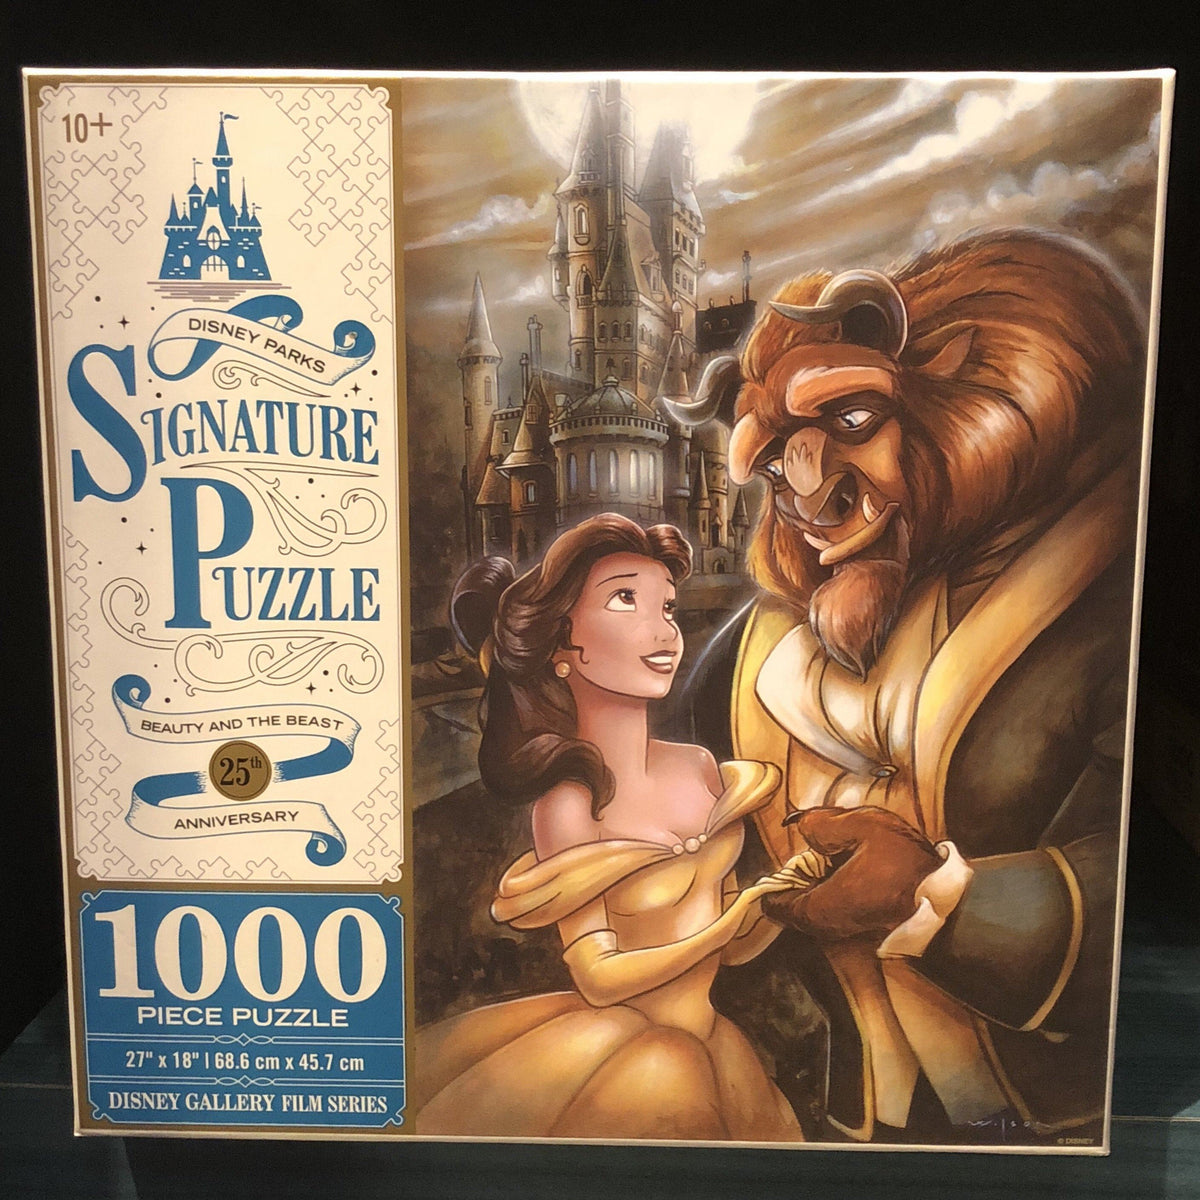 Disney Parks Signature Puzzle Lilo and Stitch 20th Anniversary